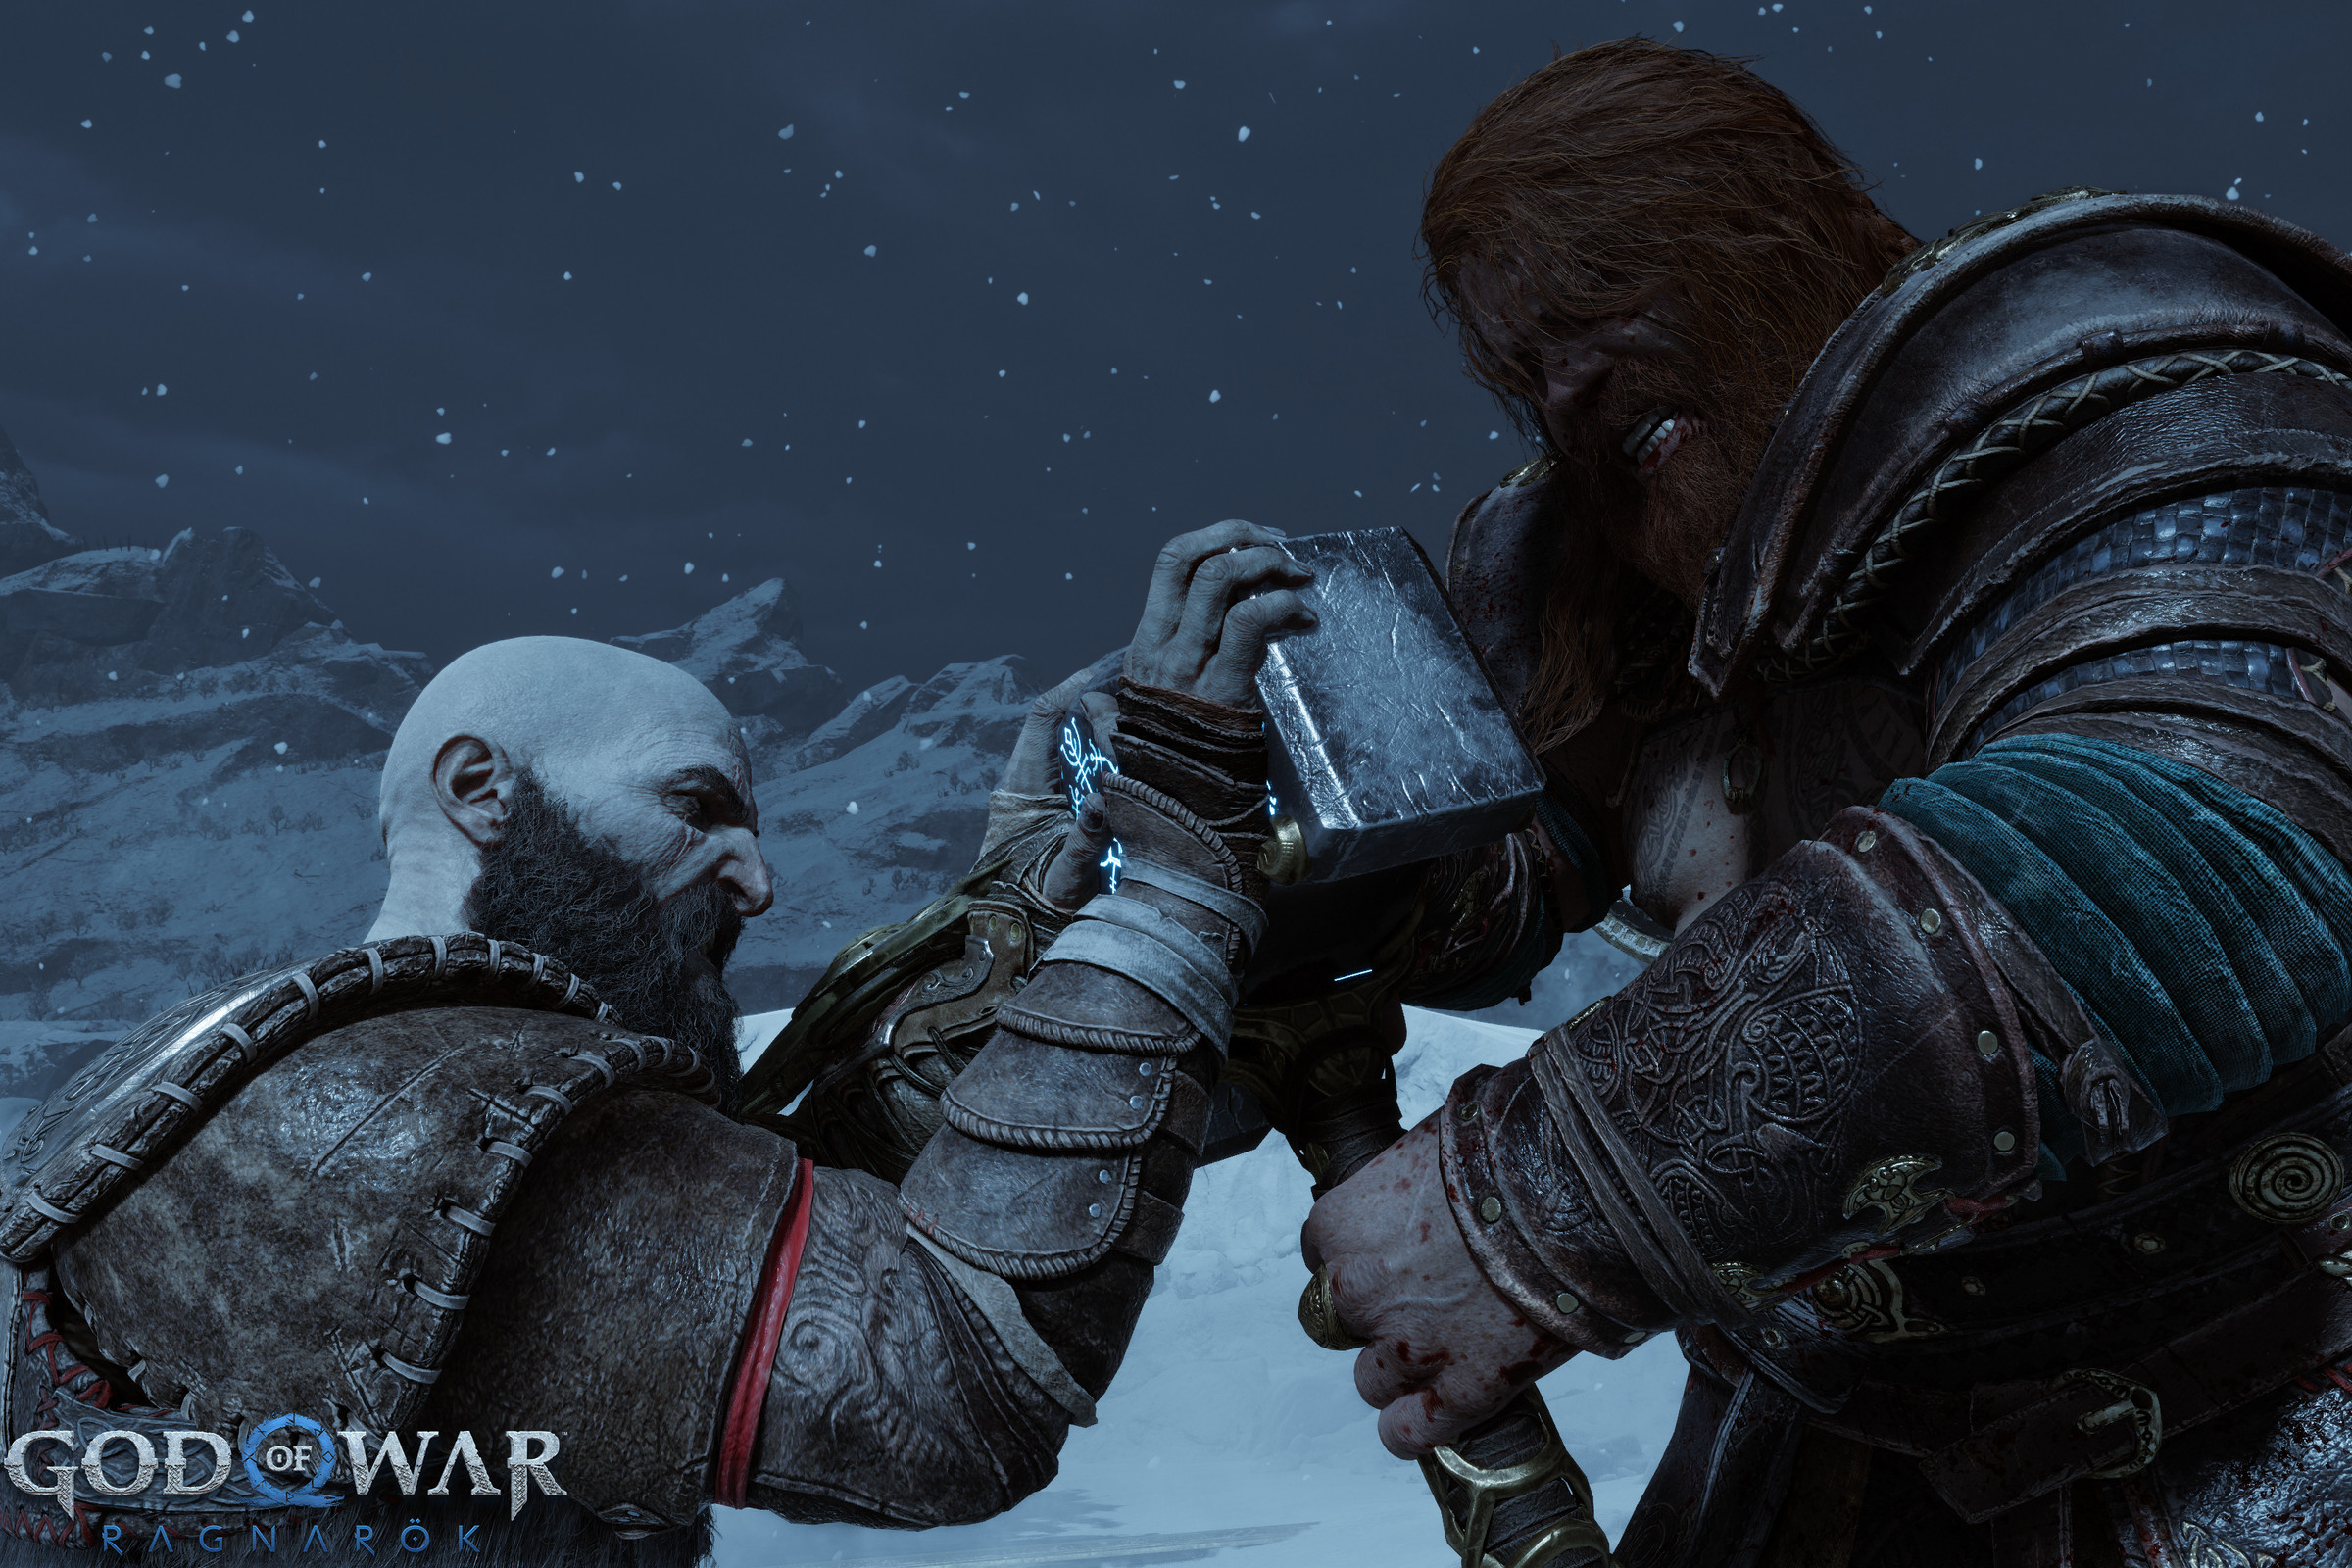 Kratos and Thor face off in God of War Ragnarök.